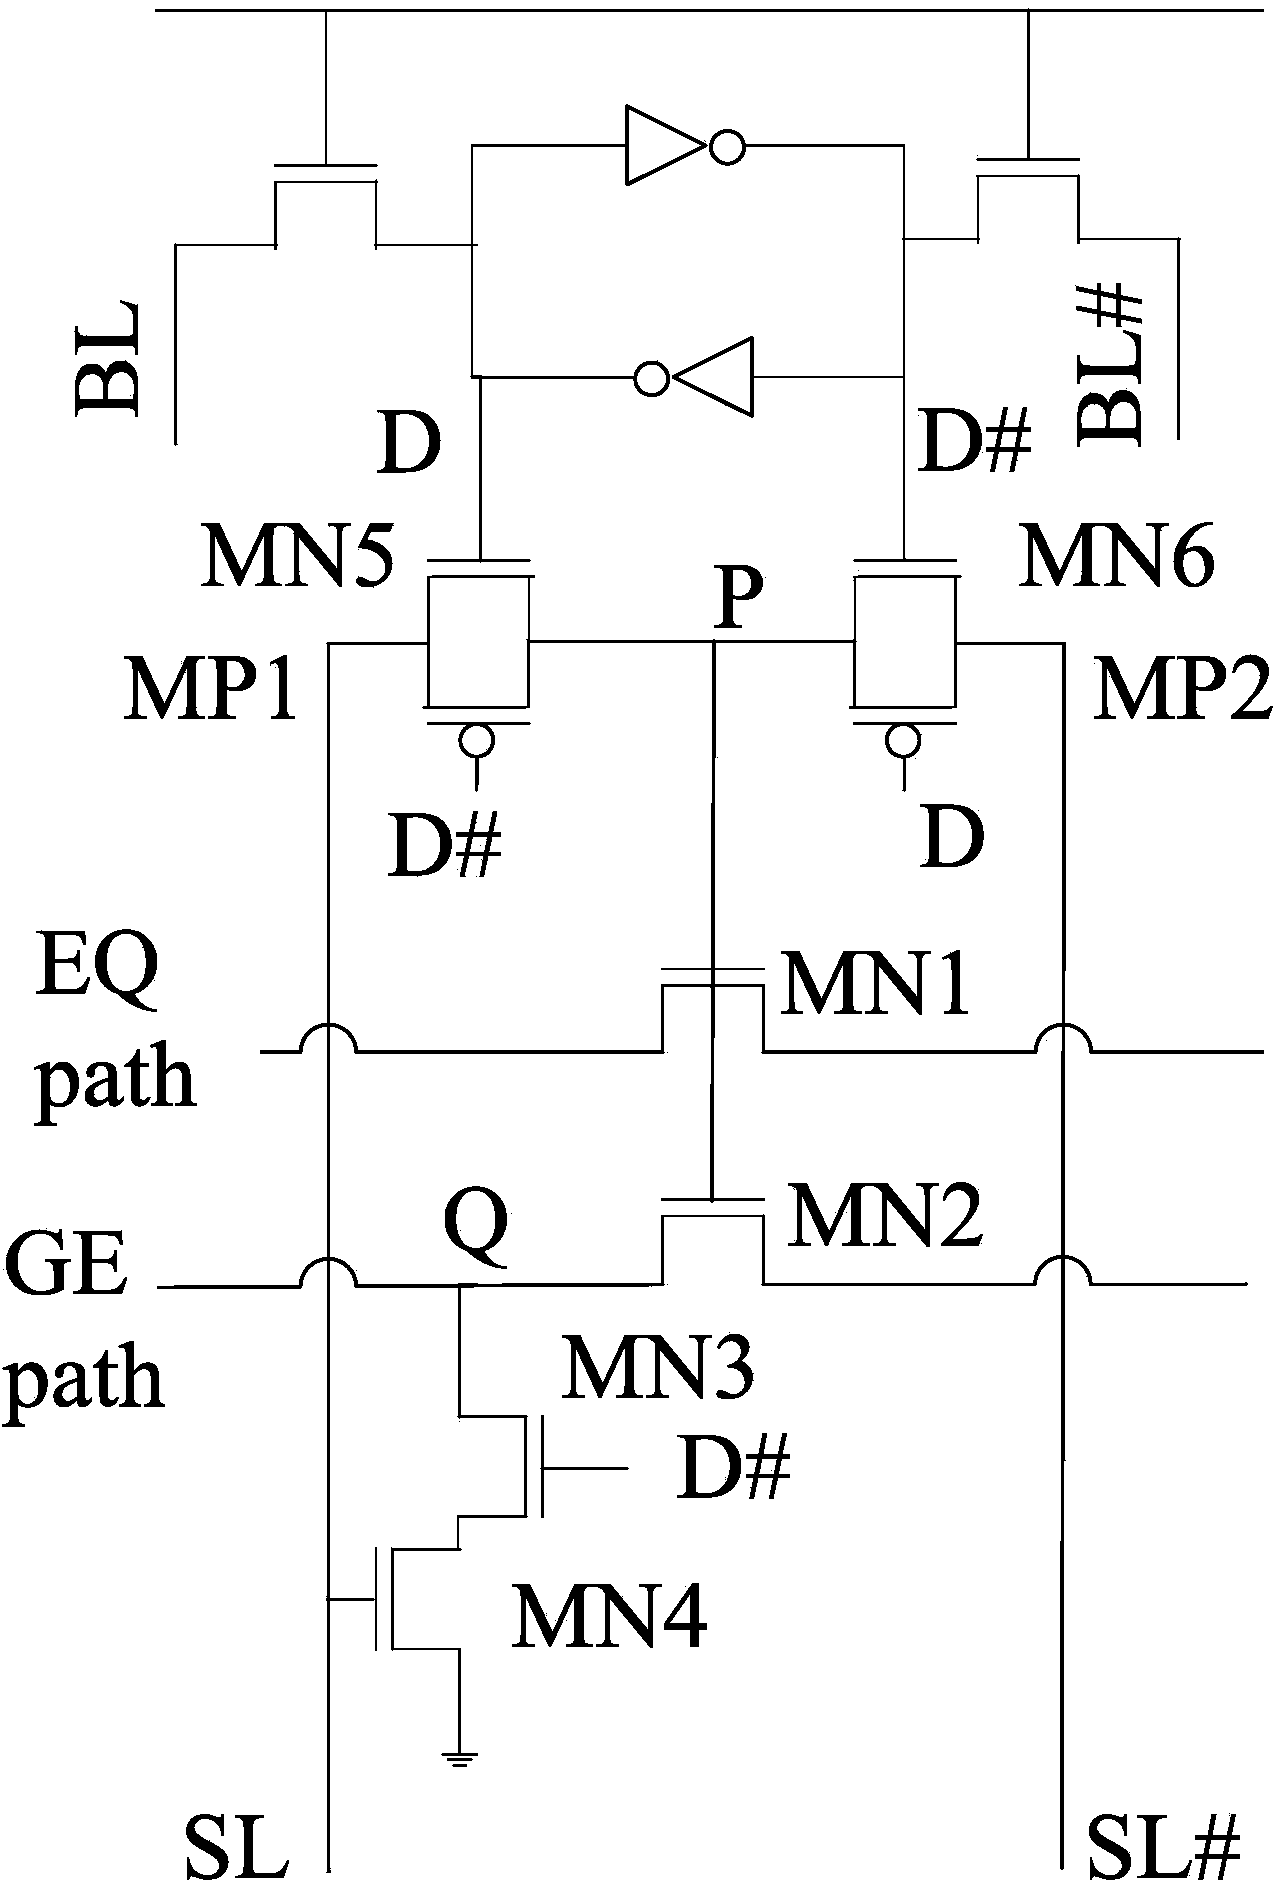 Range matching CAM (Content Addressable Memory) unit circuit and RCAM (Range Content Addressable Memory) composed of range matching CAM unit circuit